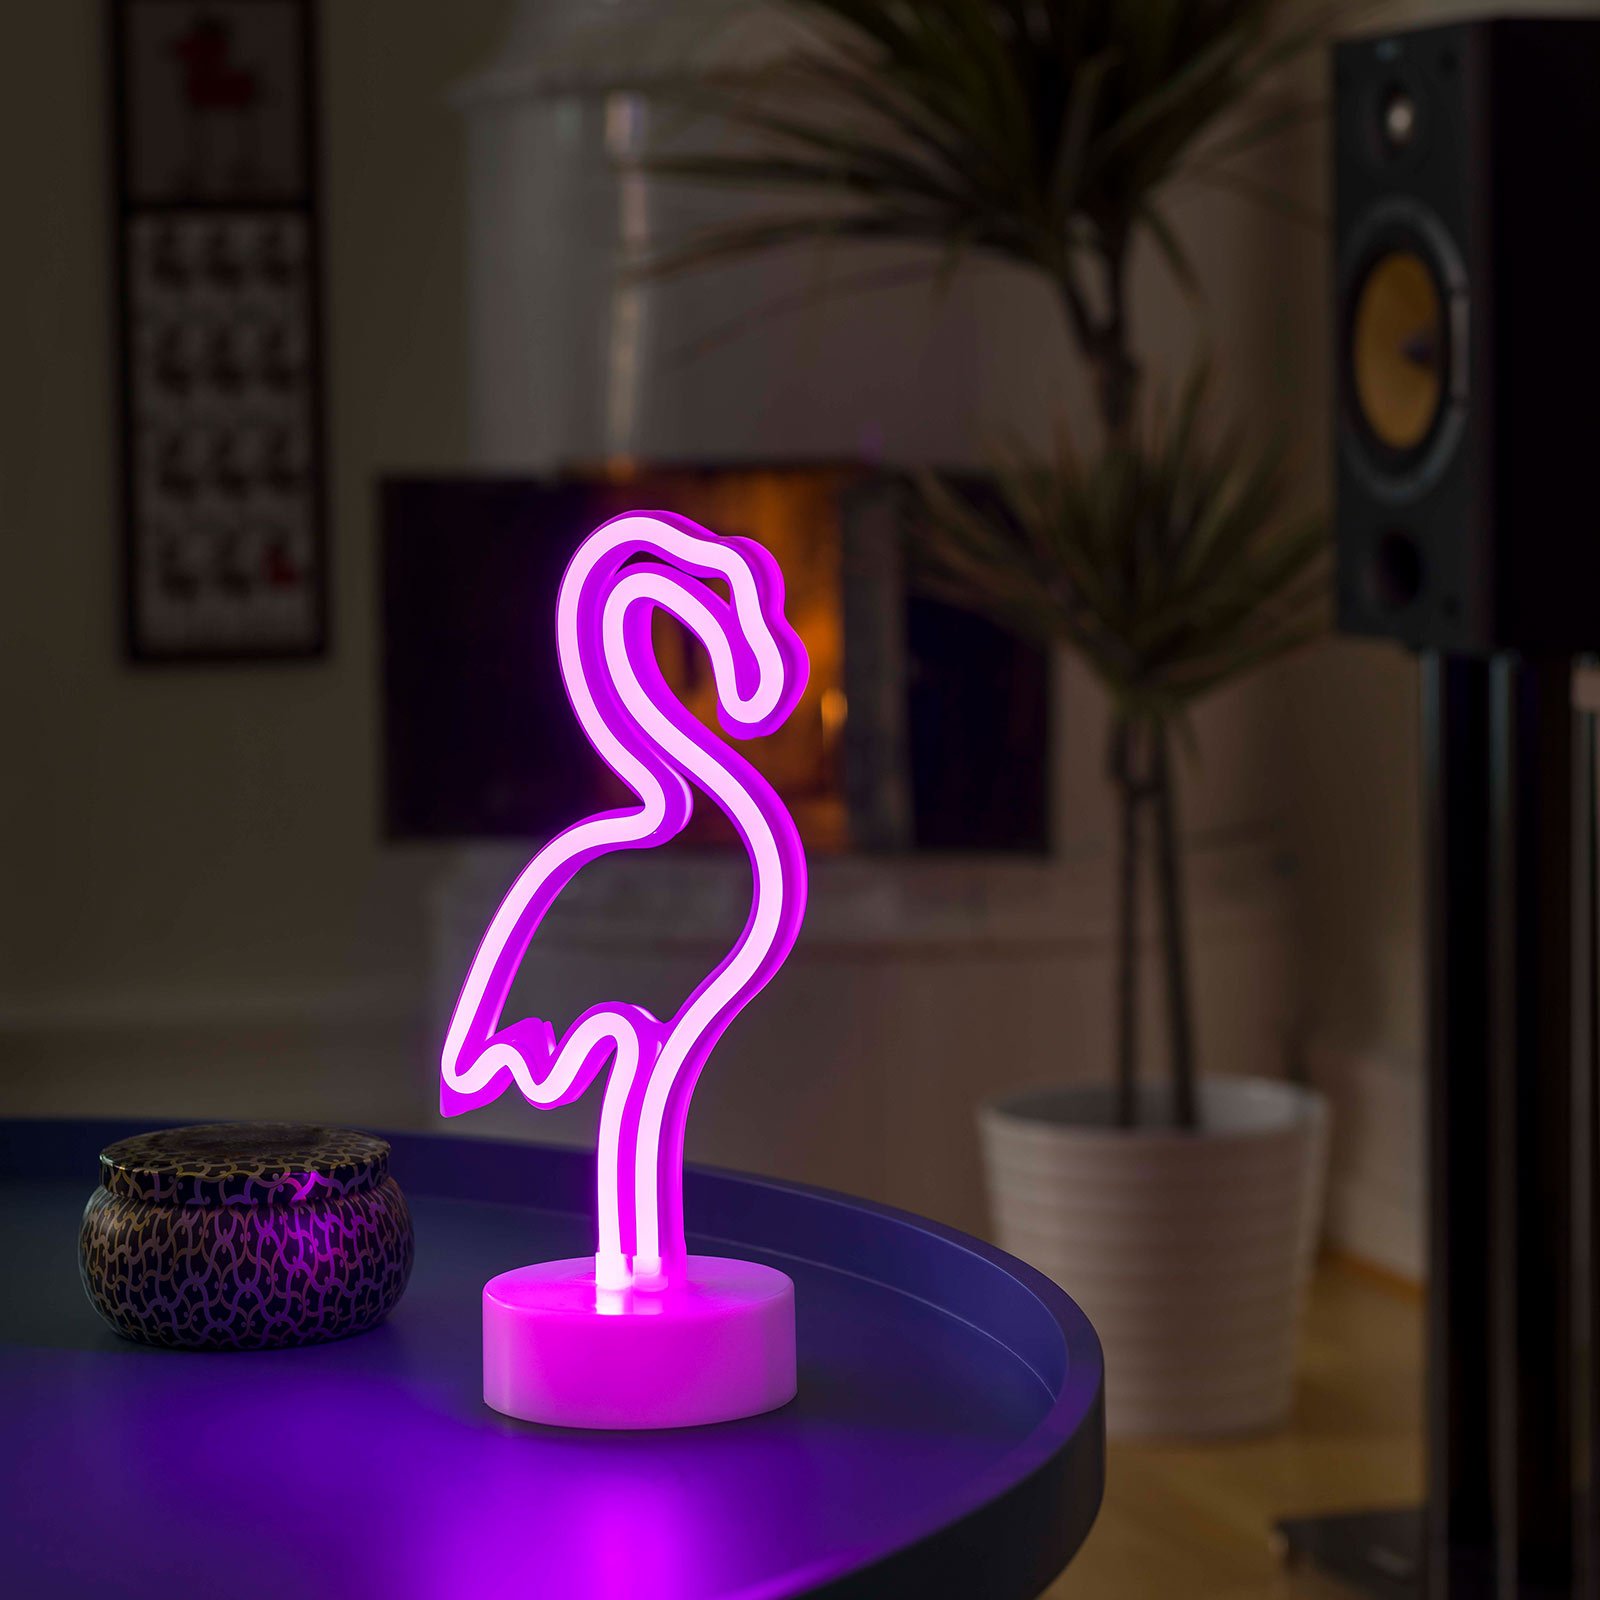 LED-Dekorationsleuchte Flamingo, batteriebetrieben